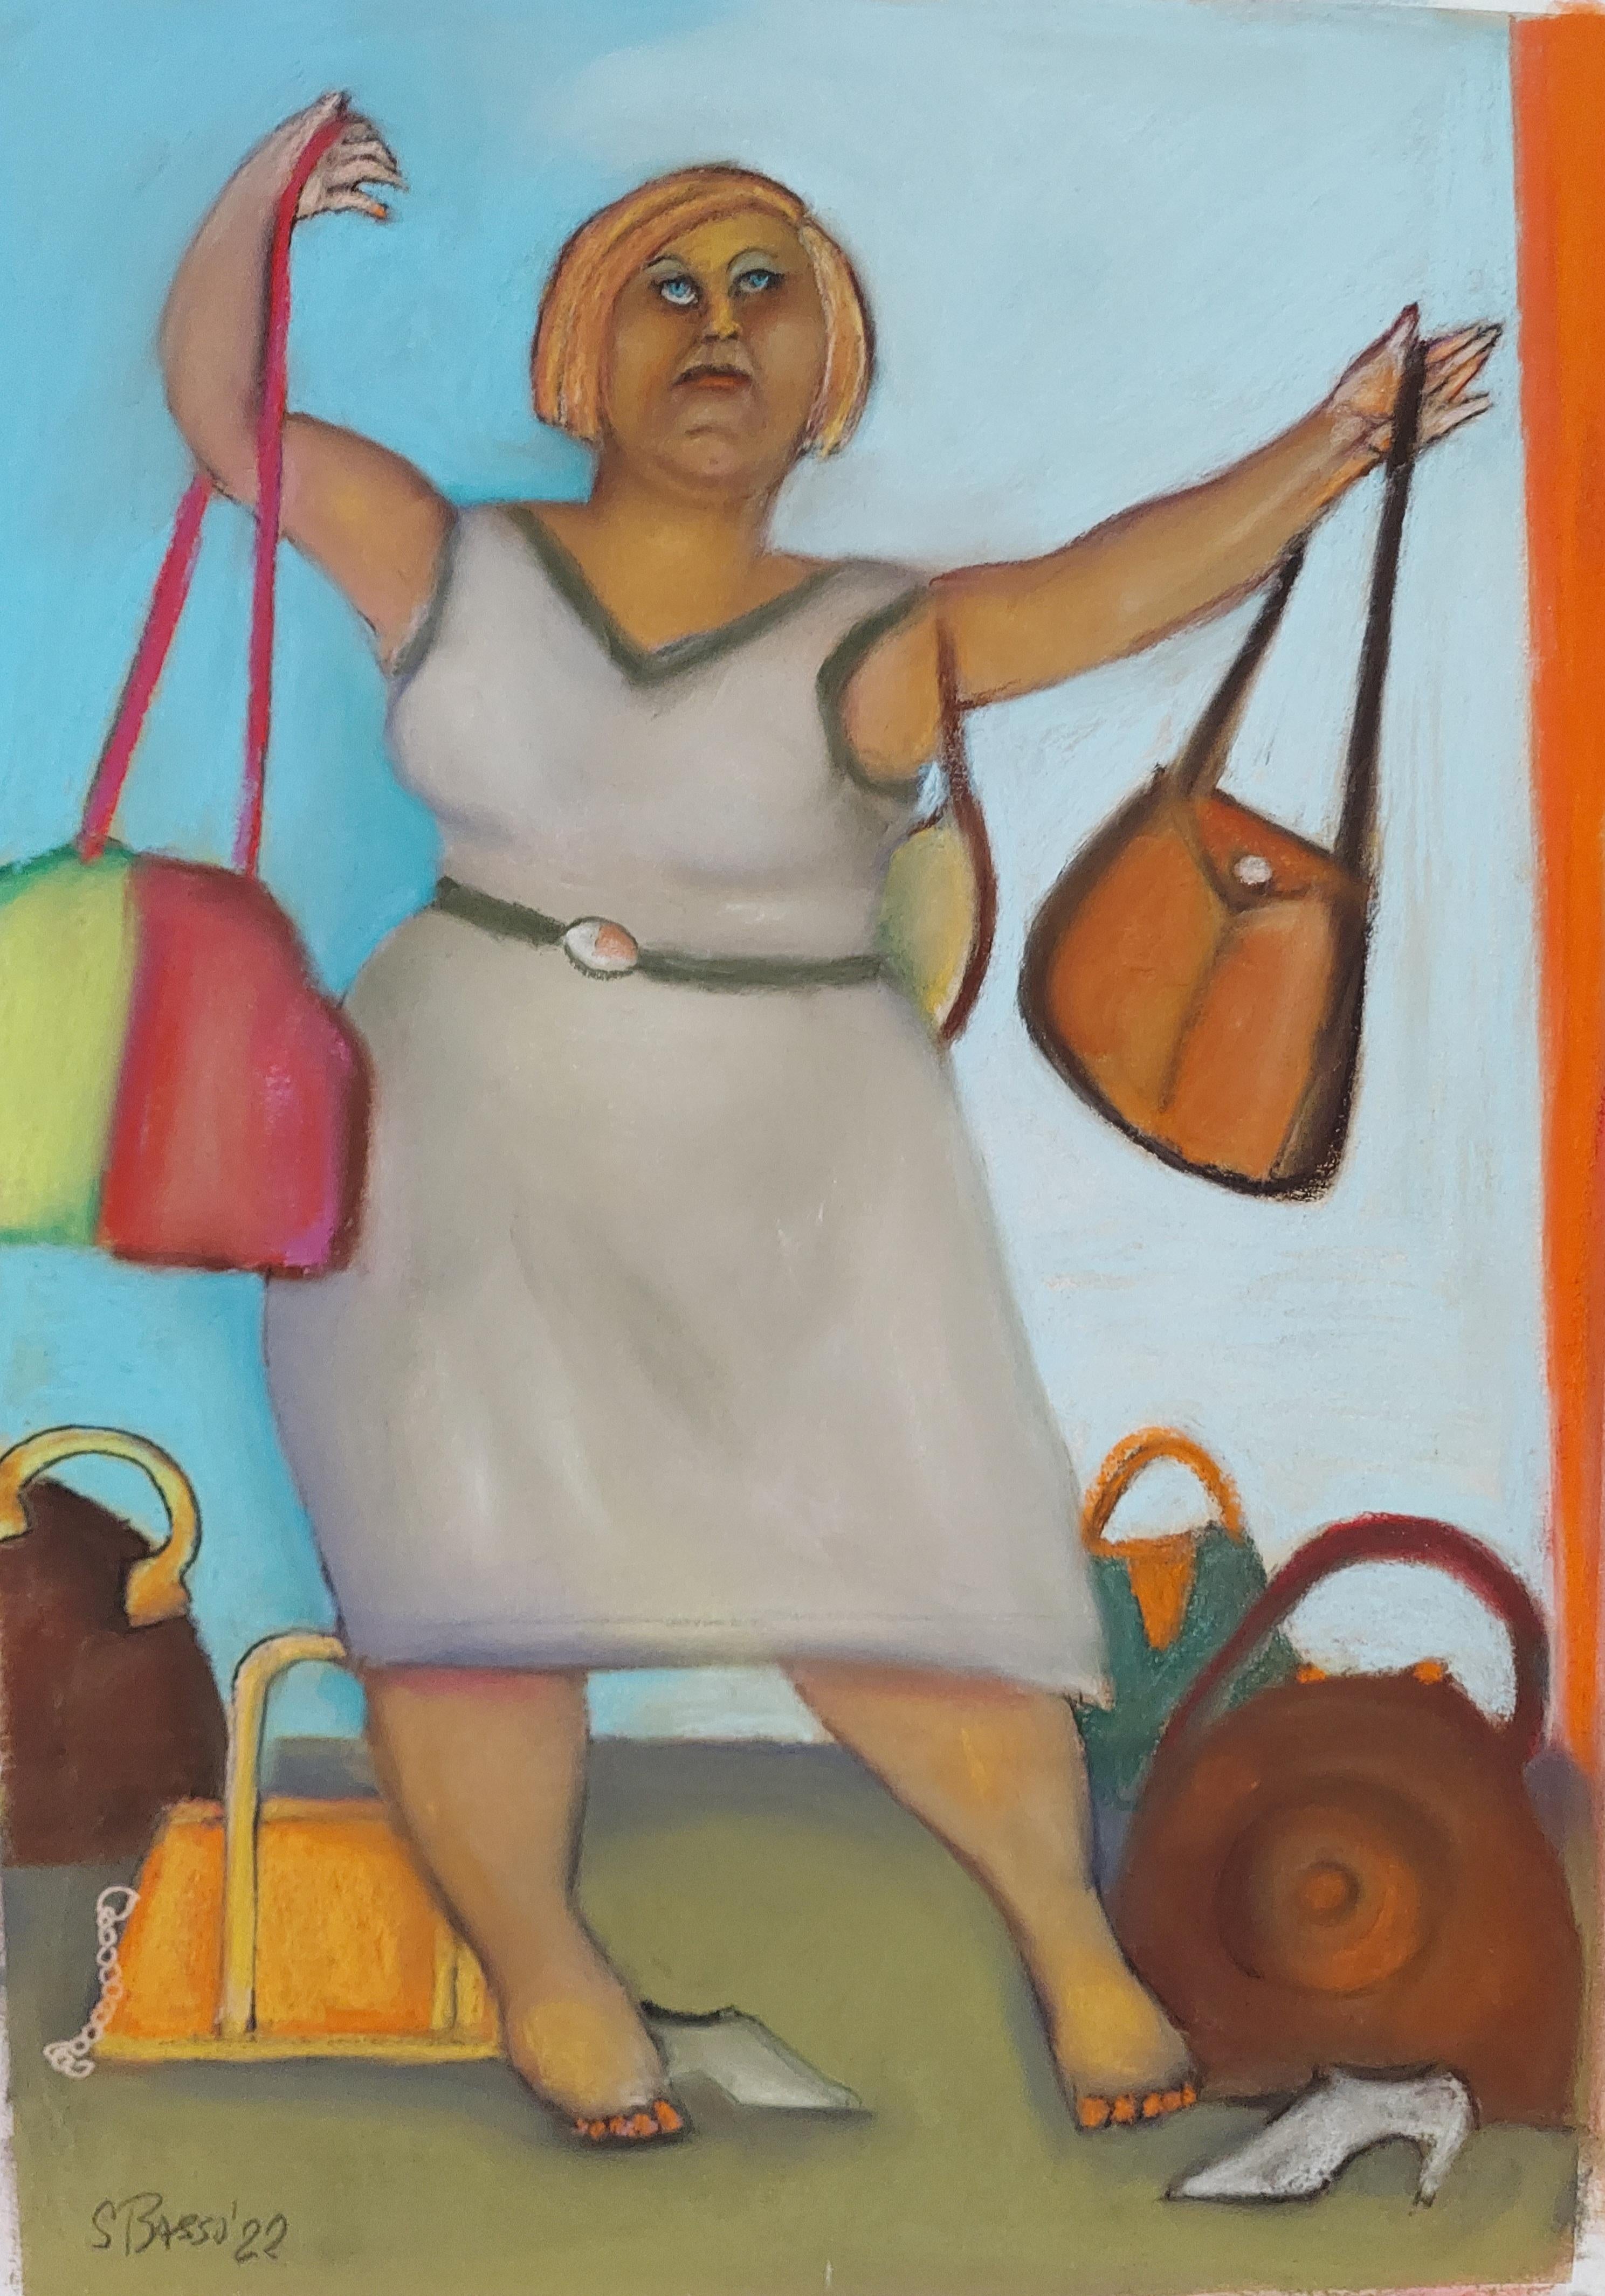 Handbag Twist single female figure with handbags humorous theme soft colors - Art by Stephen Basso